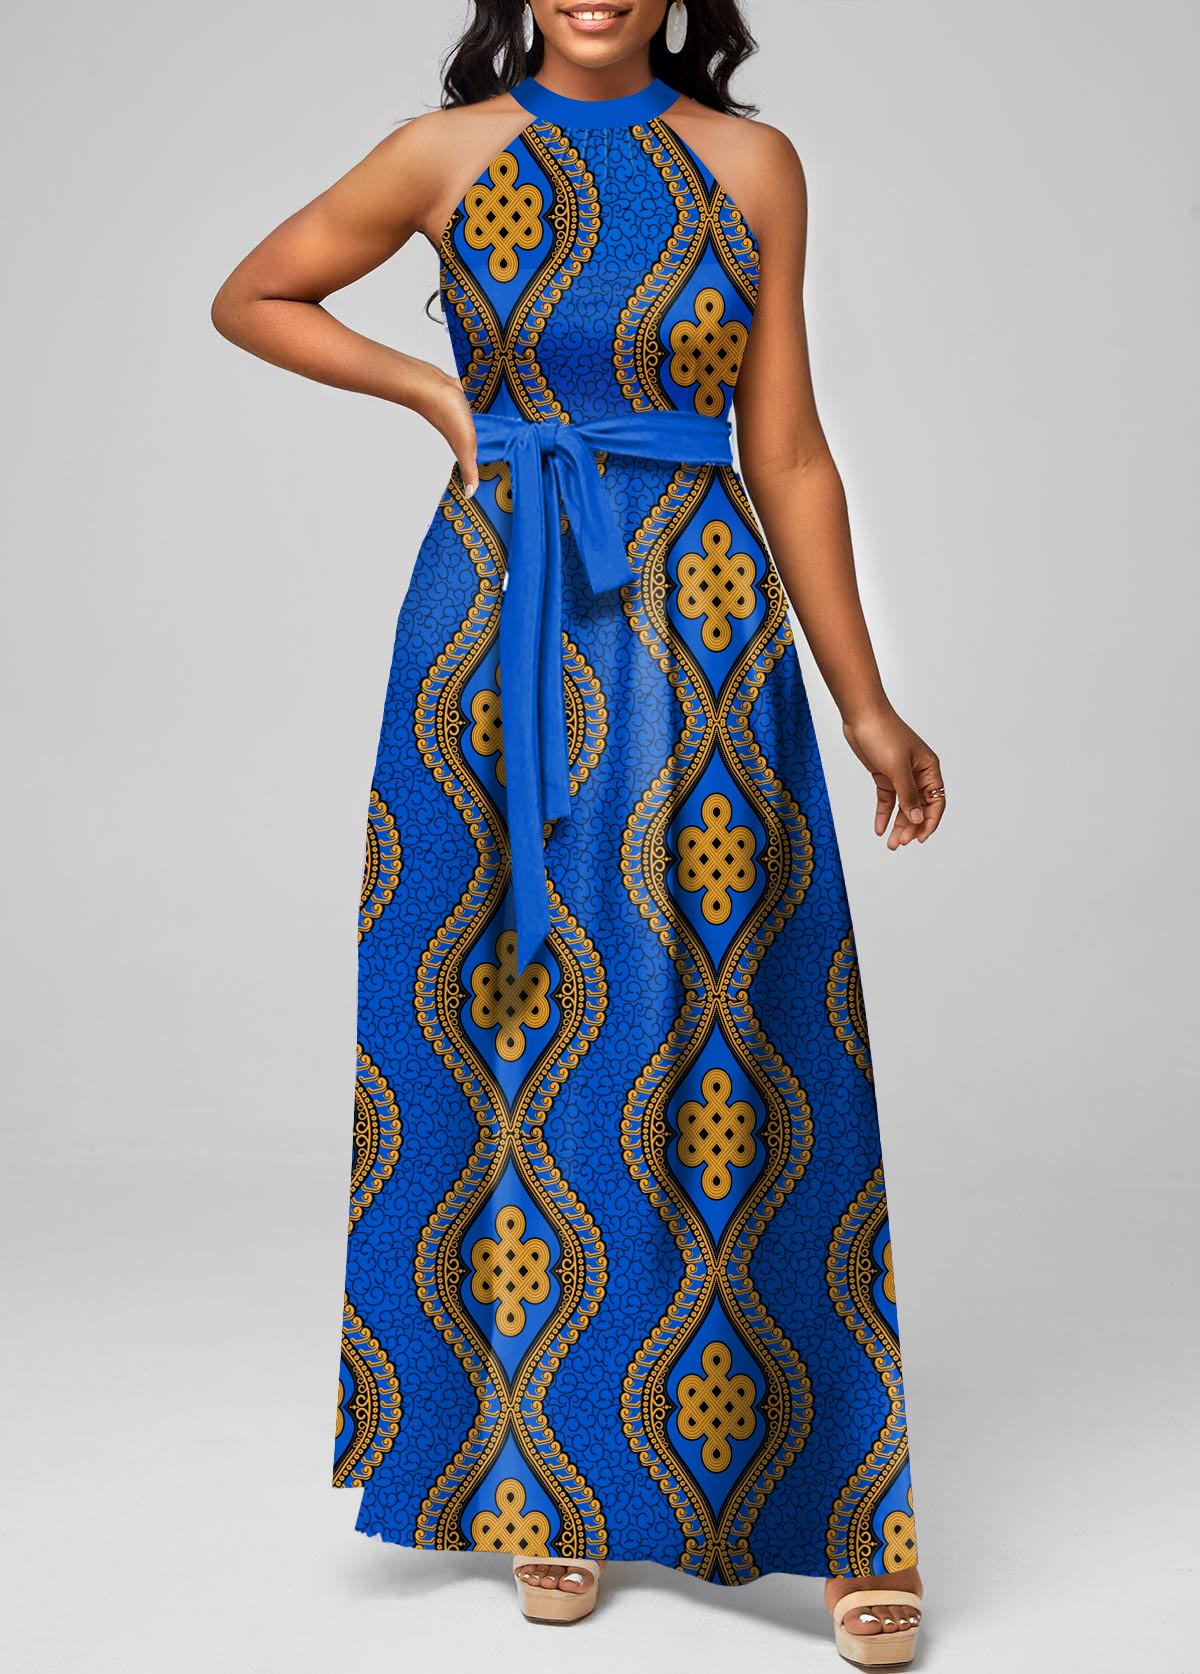 Tribal Print Tie Belted Blue Maxi Dress